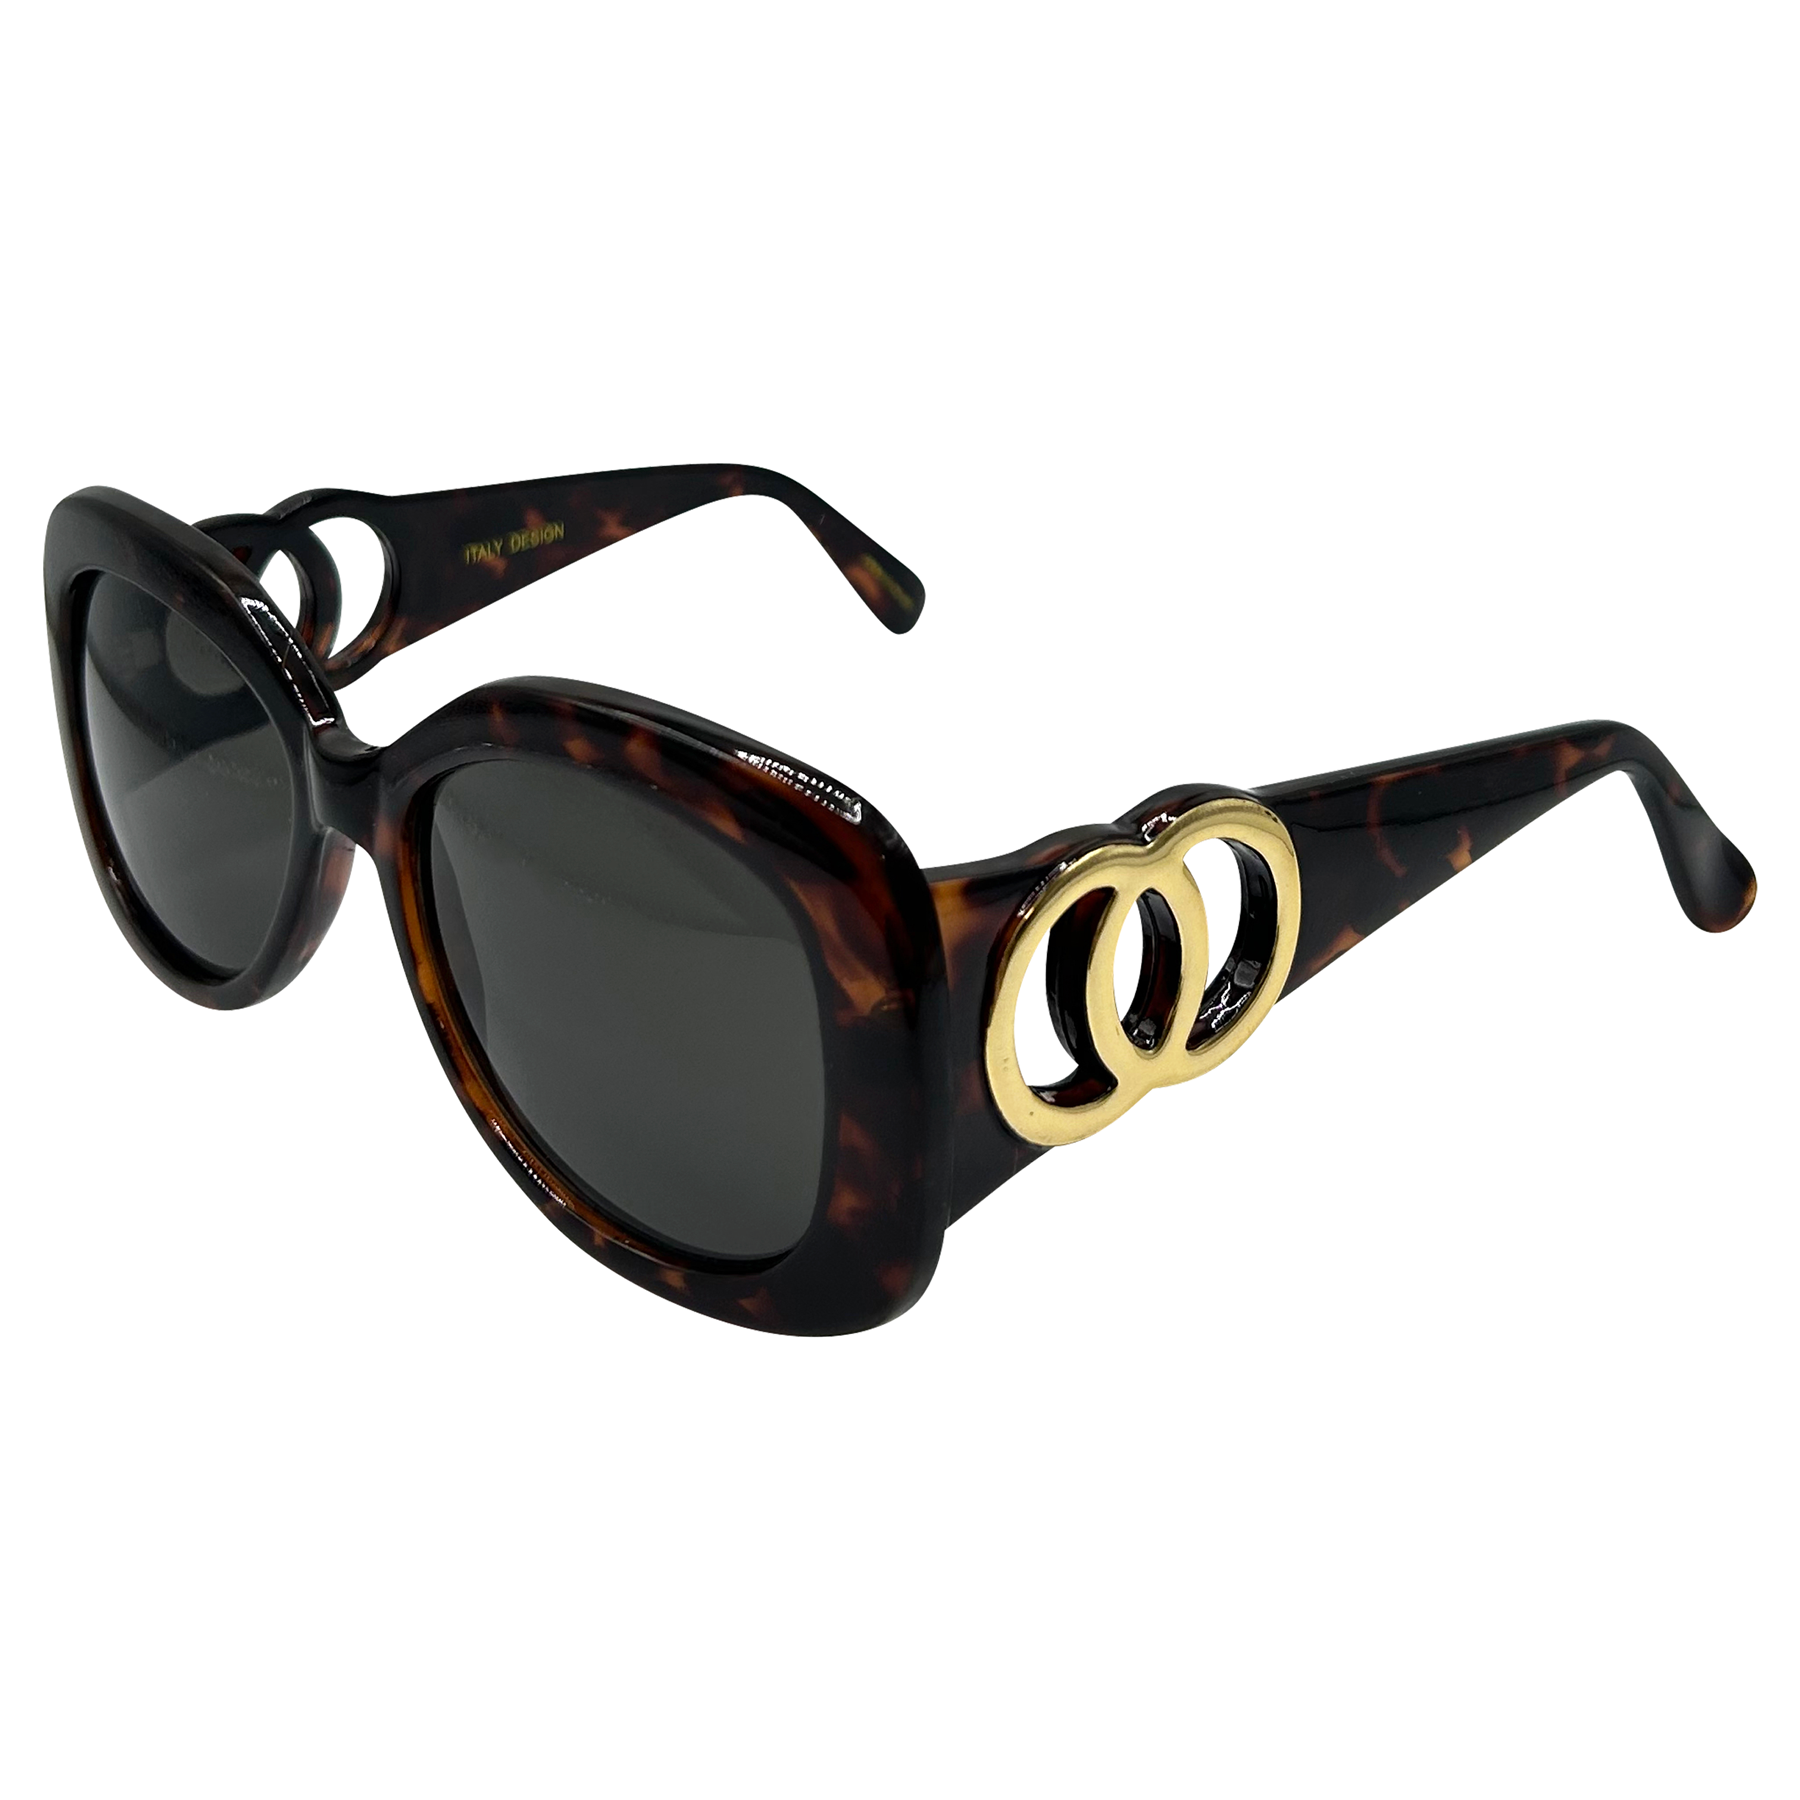 BESITOS Tortoise/Super Dark Mod 90s Sunglasses